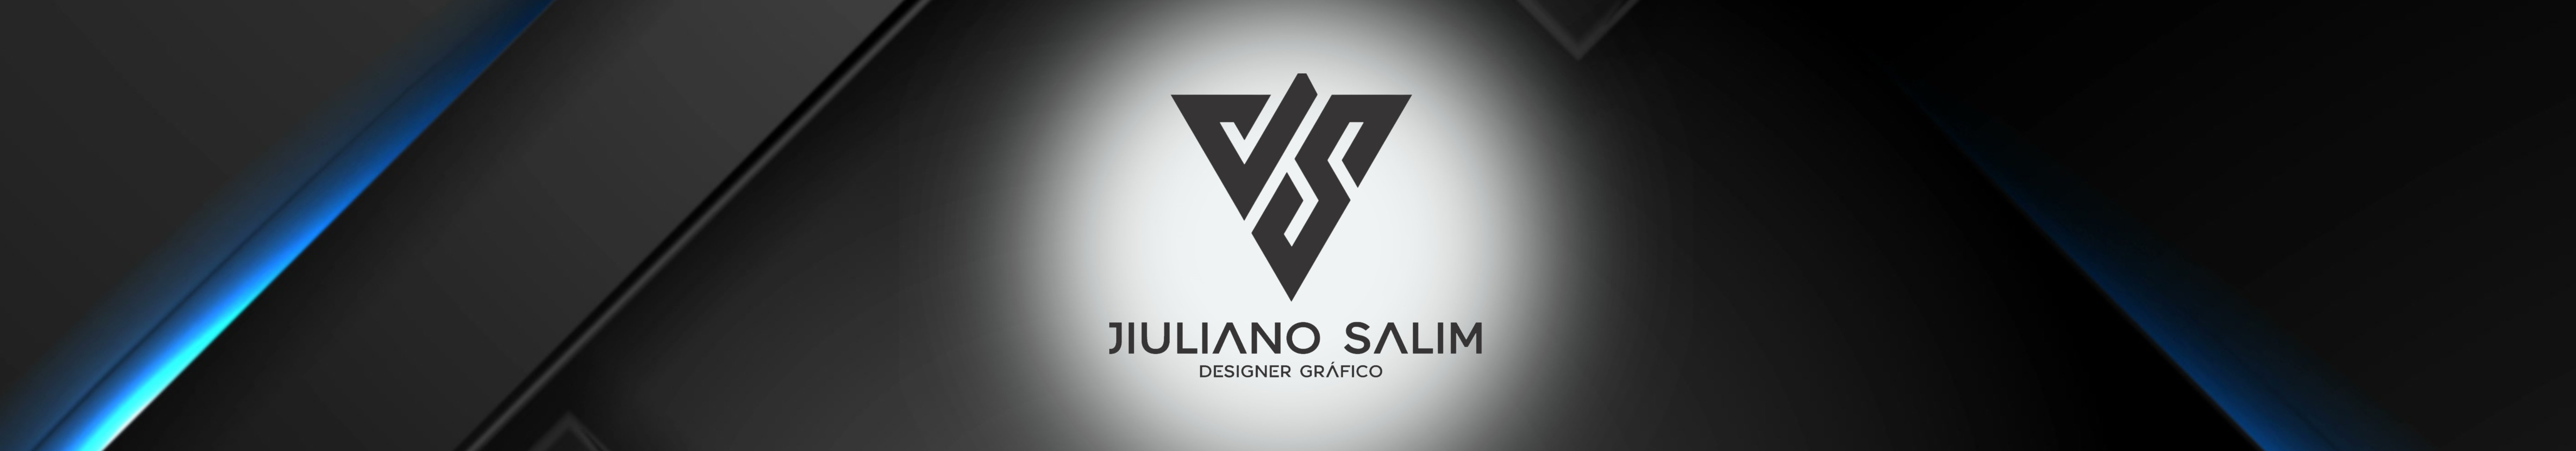 Jiuliano Salims profilbanner